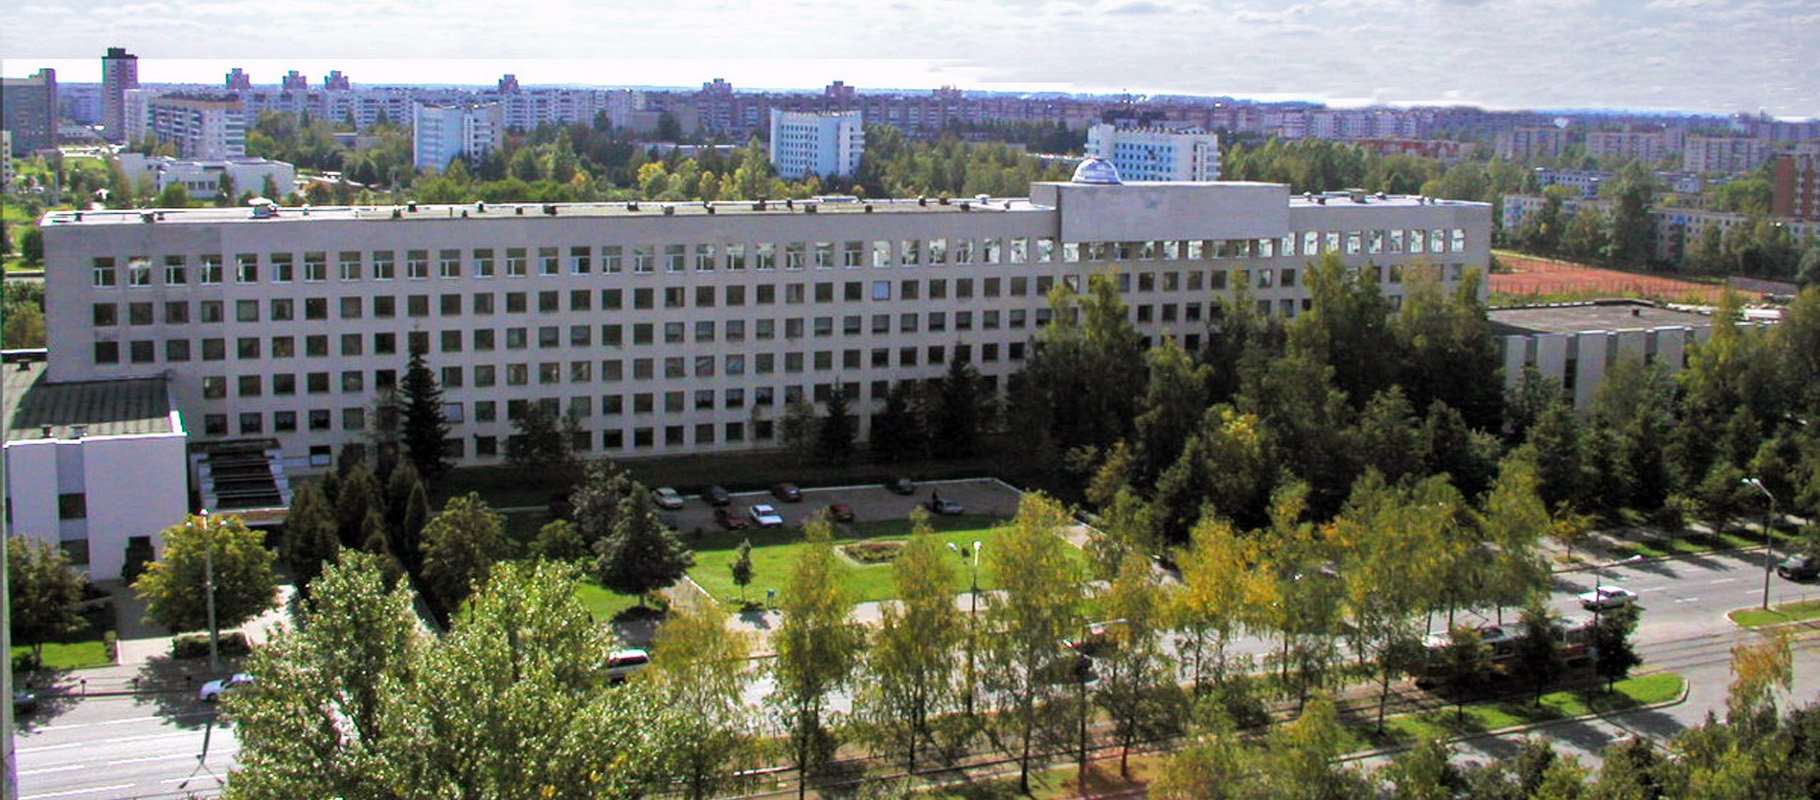 Сайт витебского университета